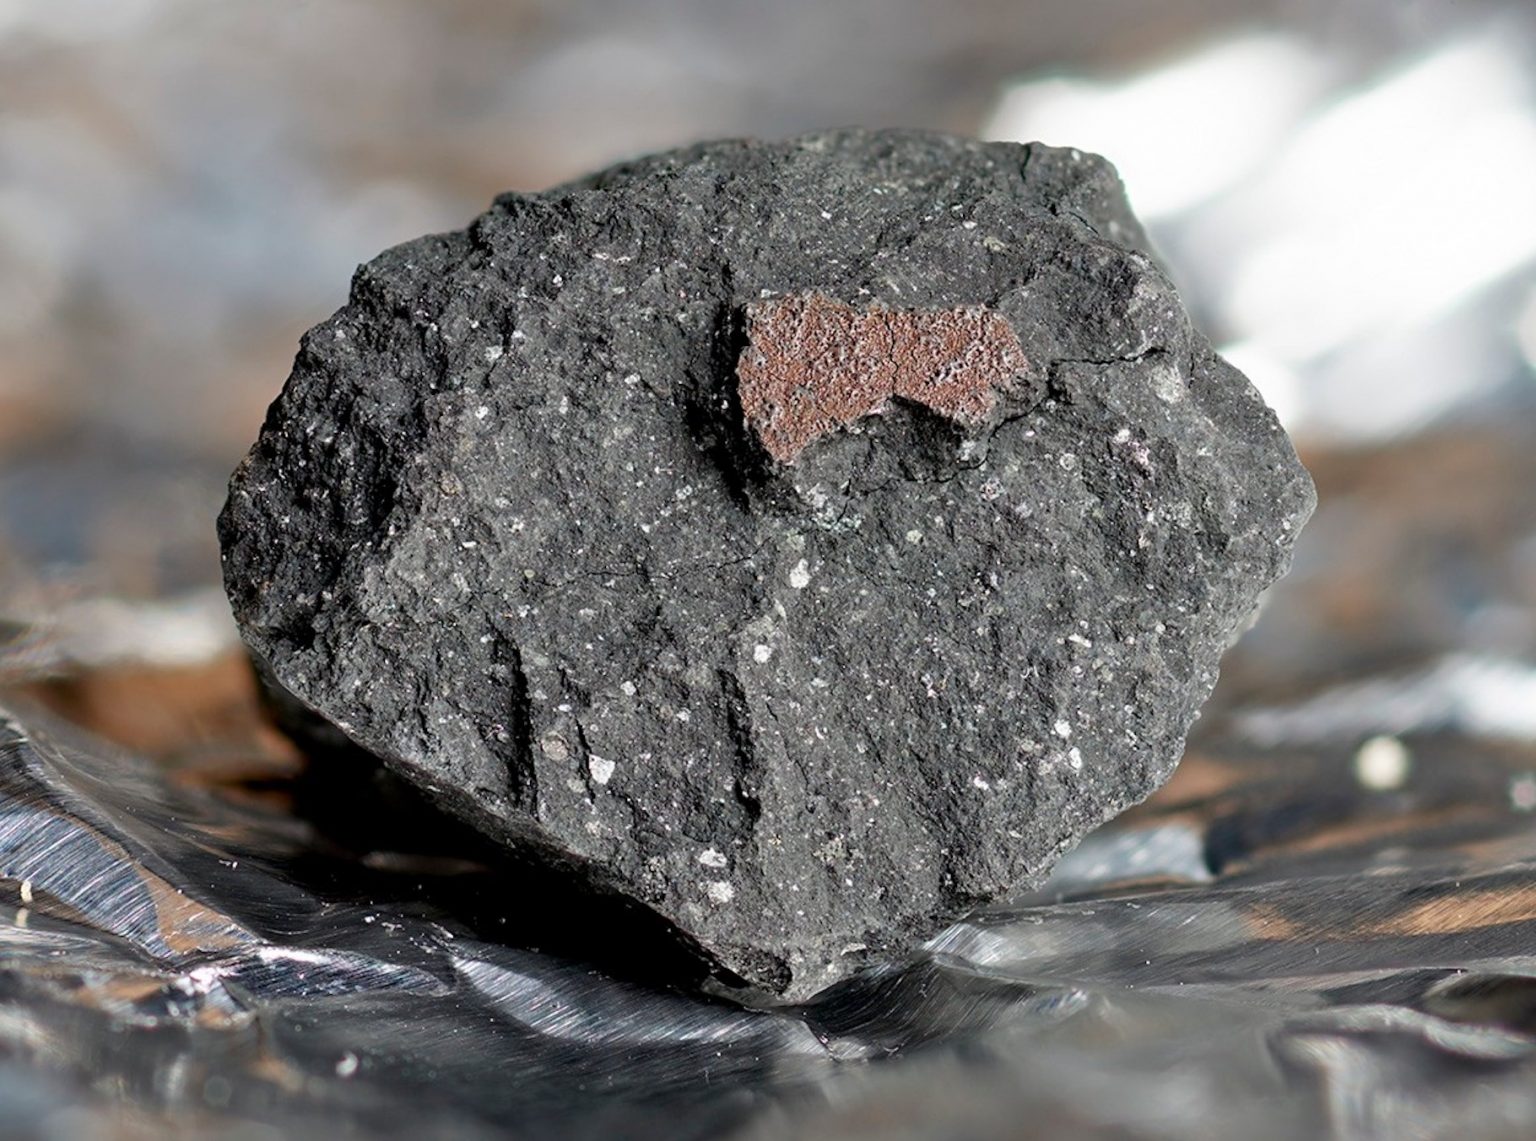 Сихотэ-Алинский метеорит